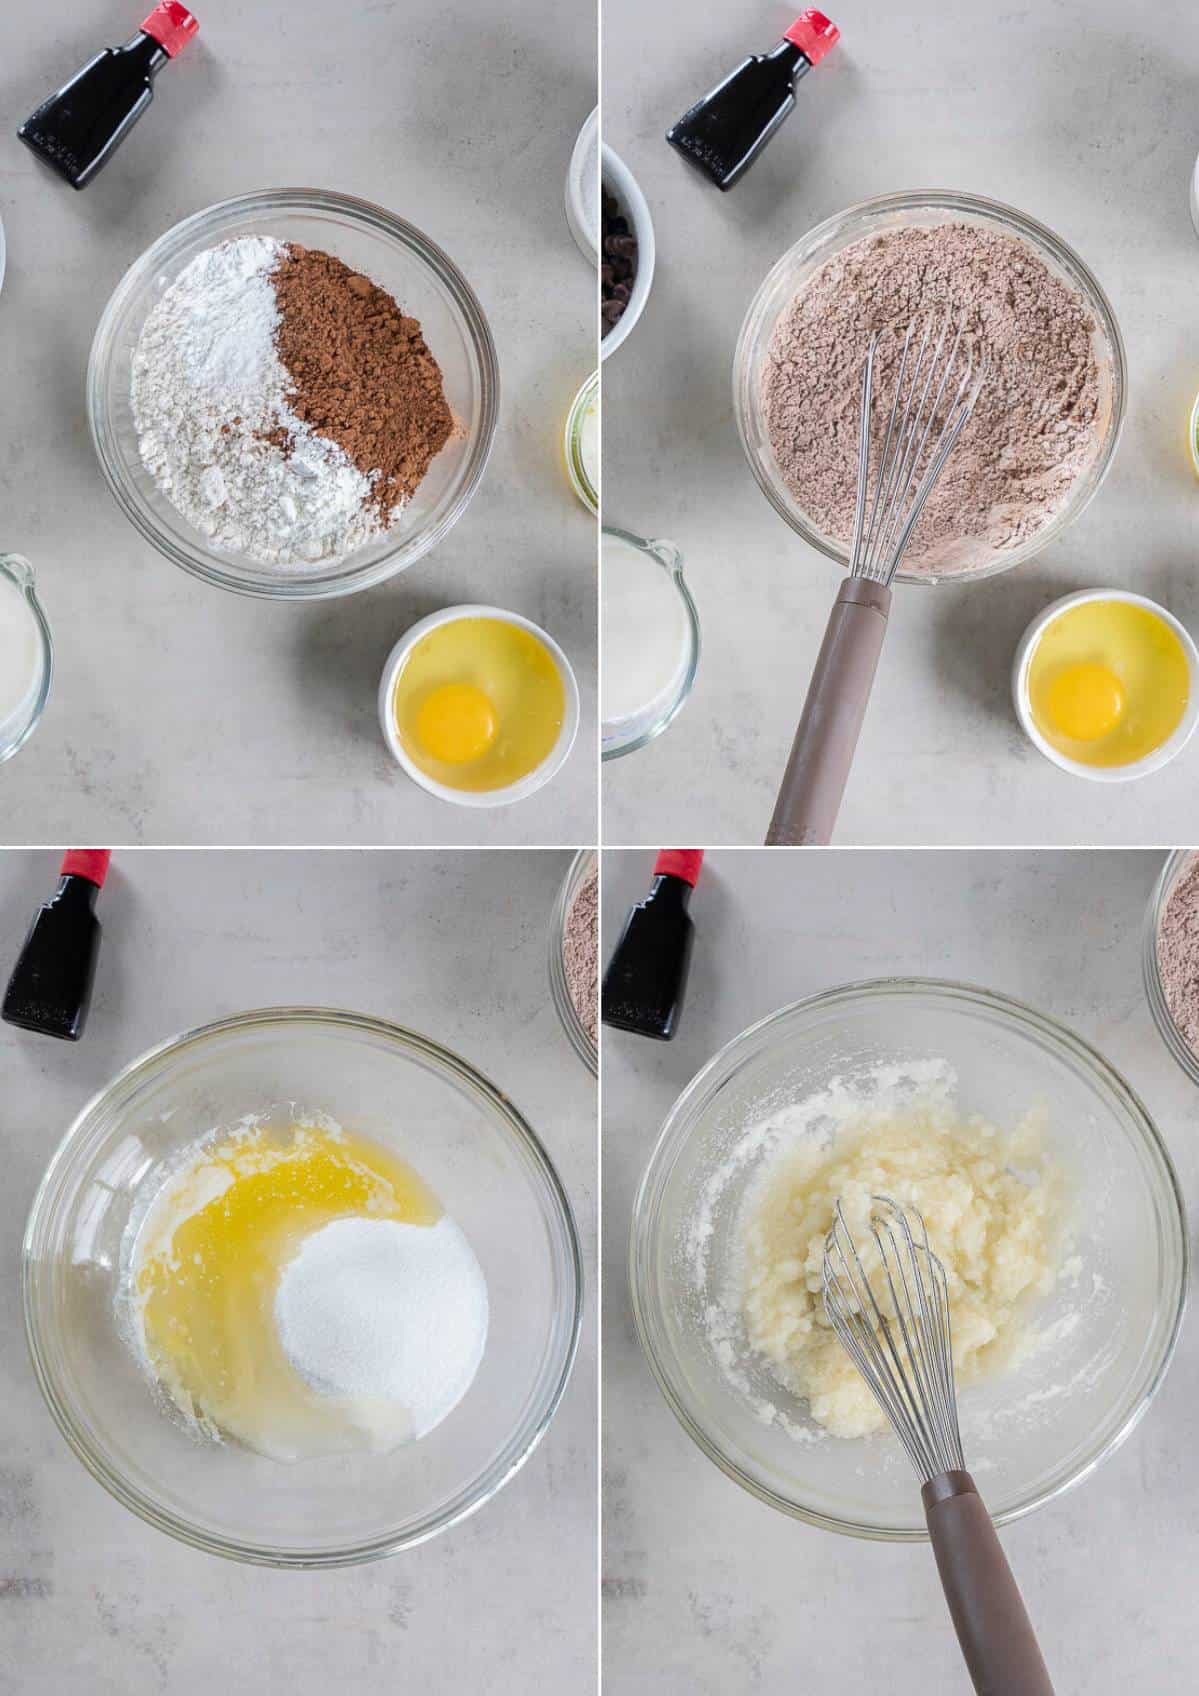 instructional photos for making red velvet muffins